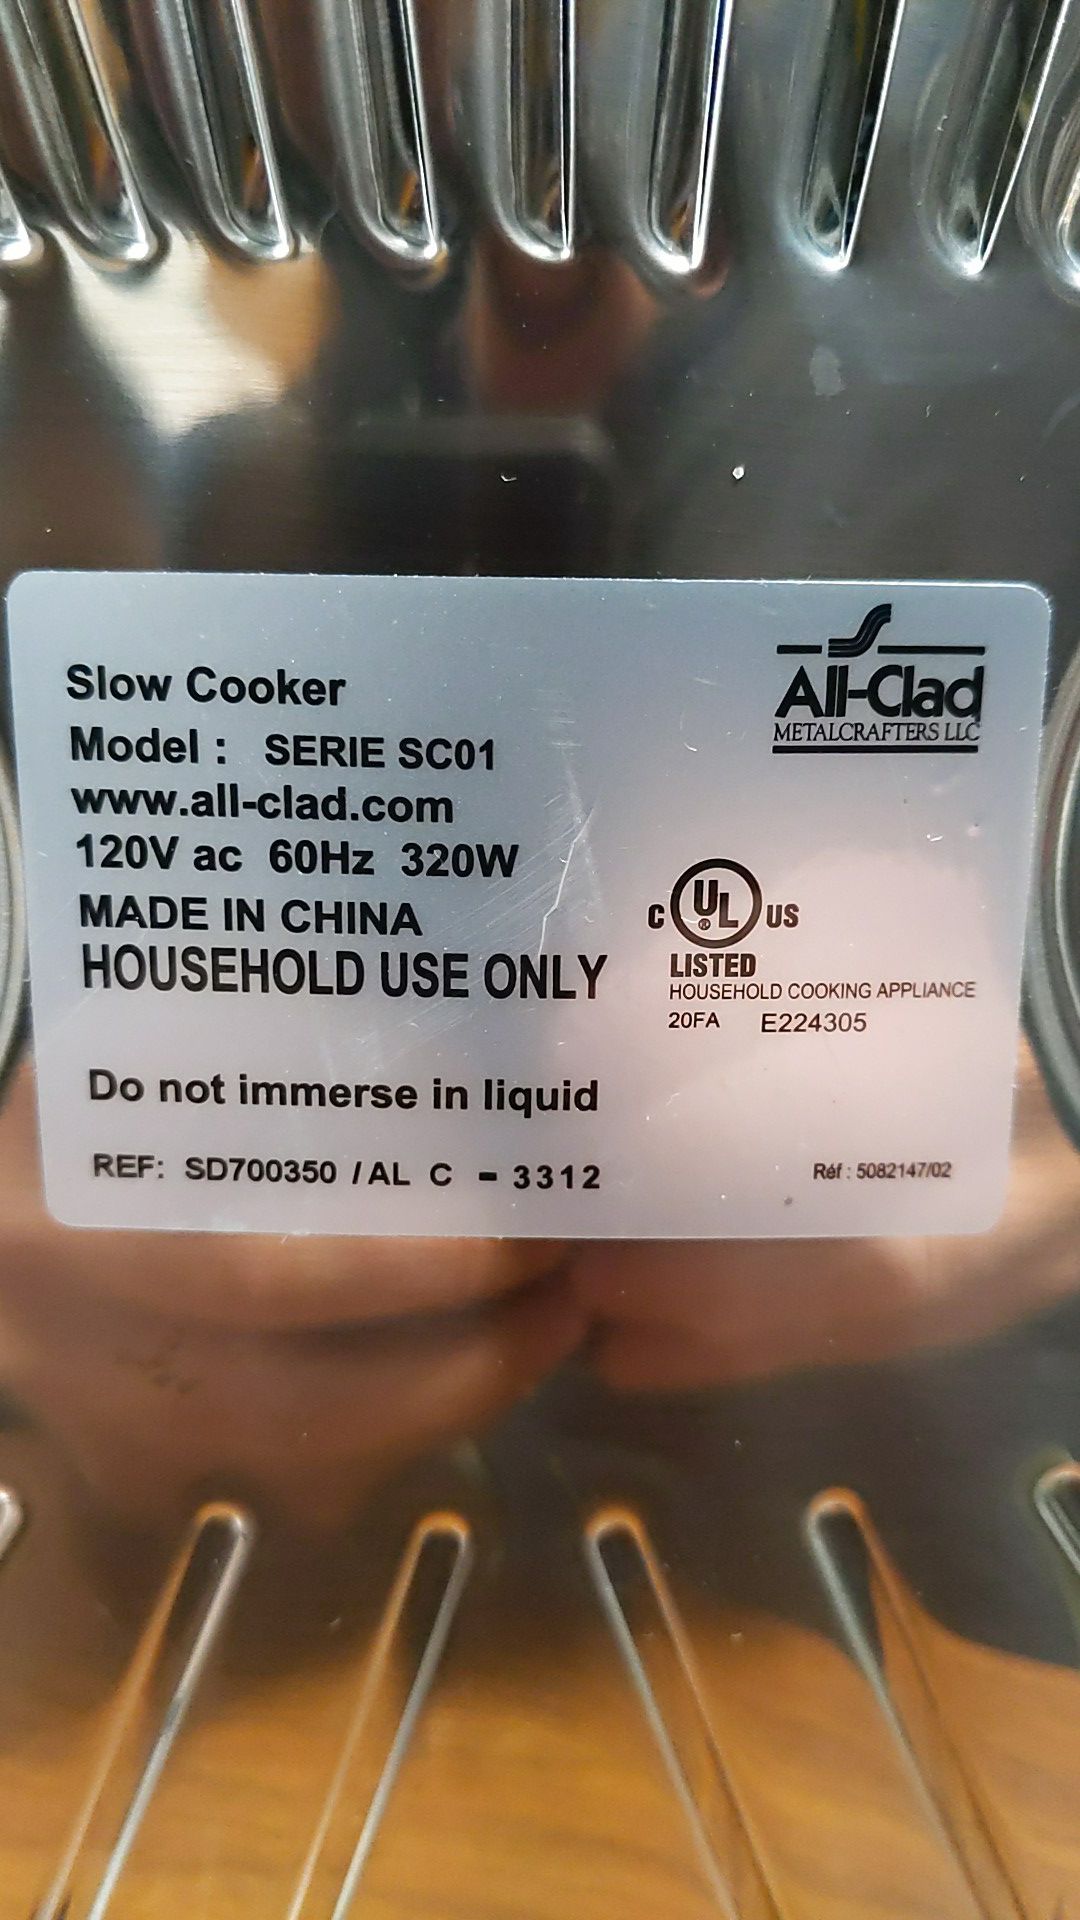 All-Clad Digital slow cooker